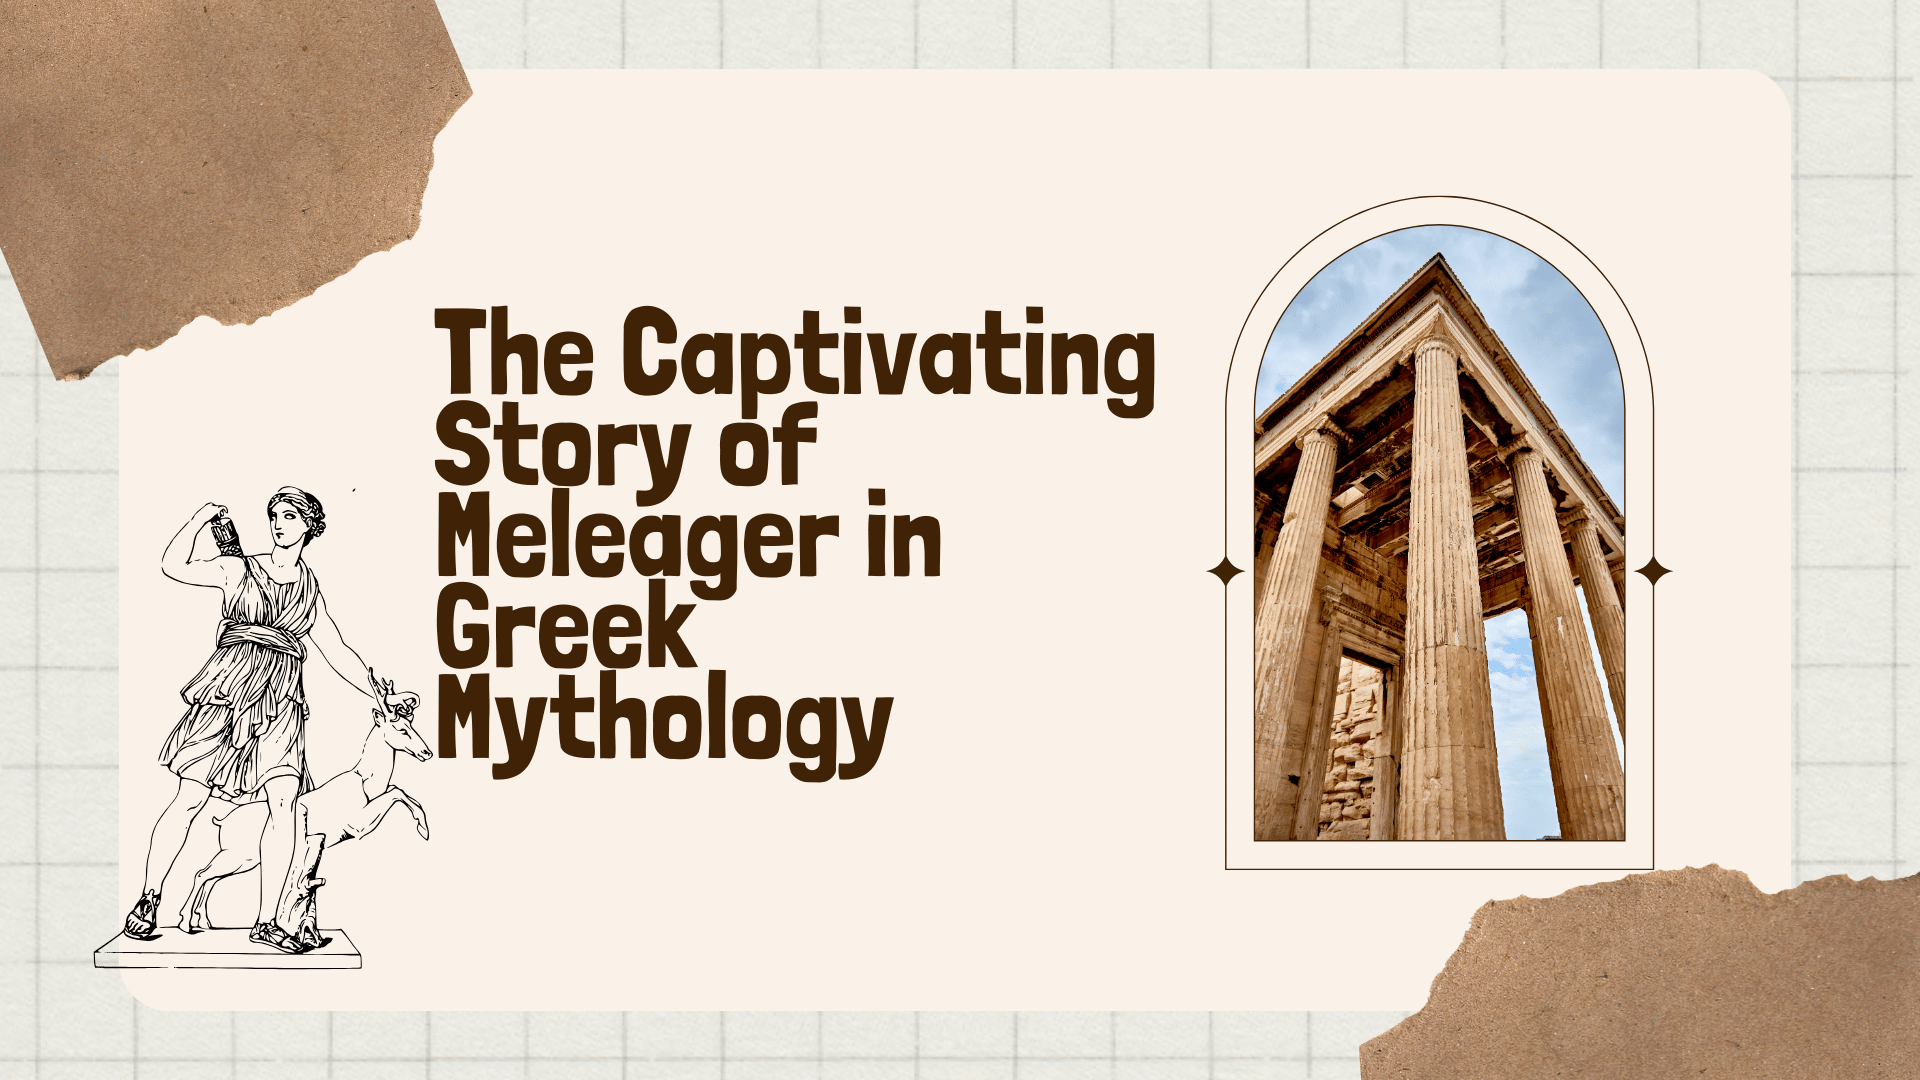 The Captivating Story of Meleager in Greek Mythology